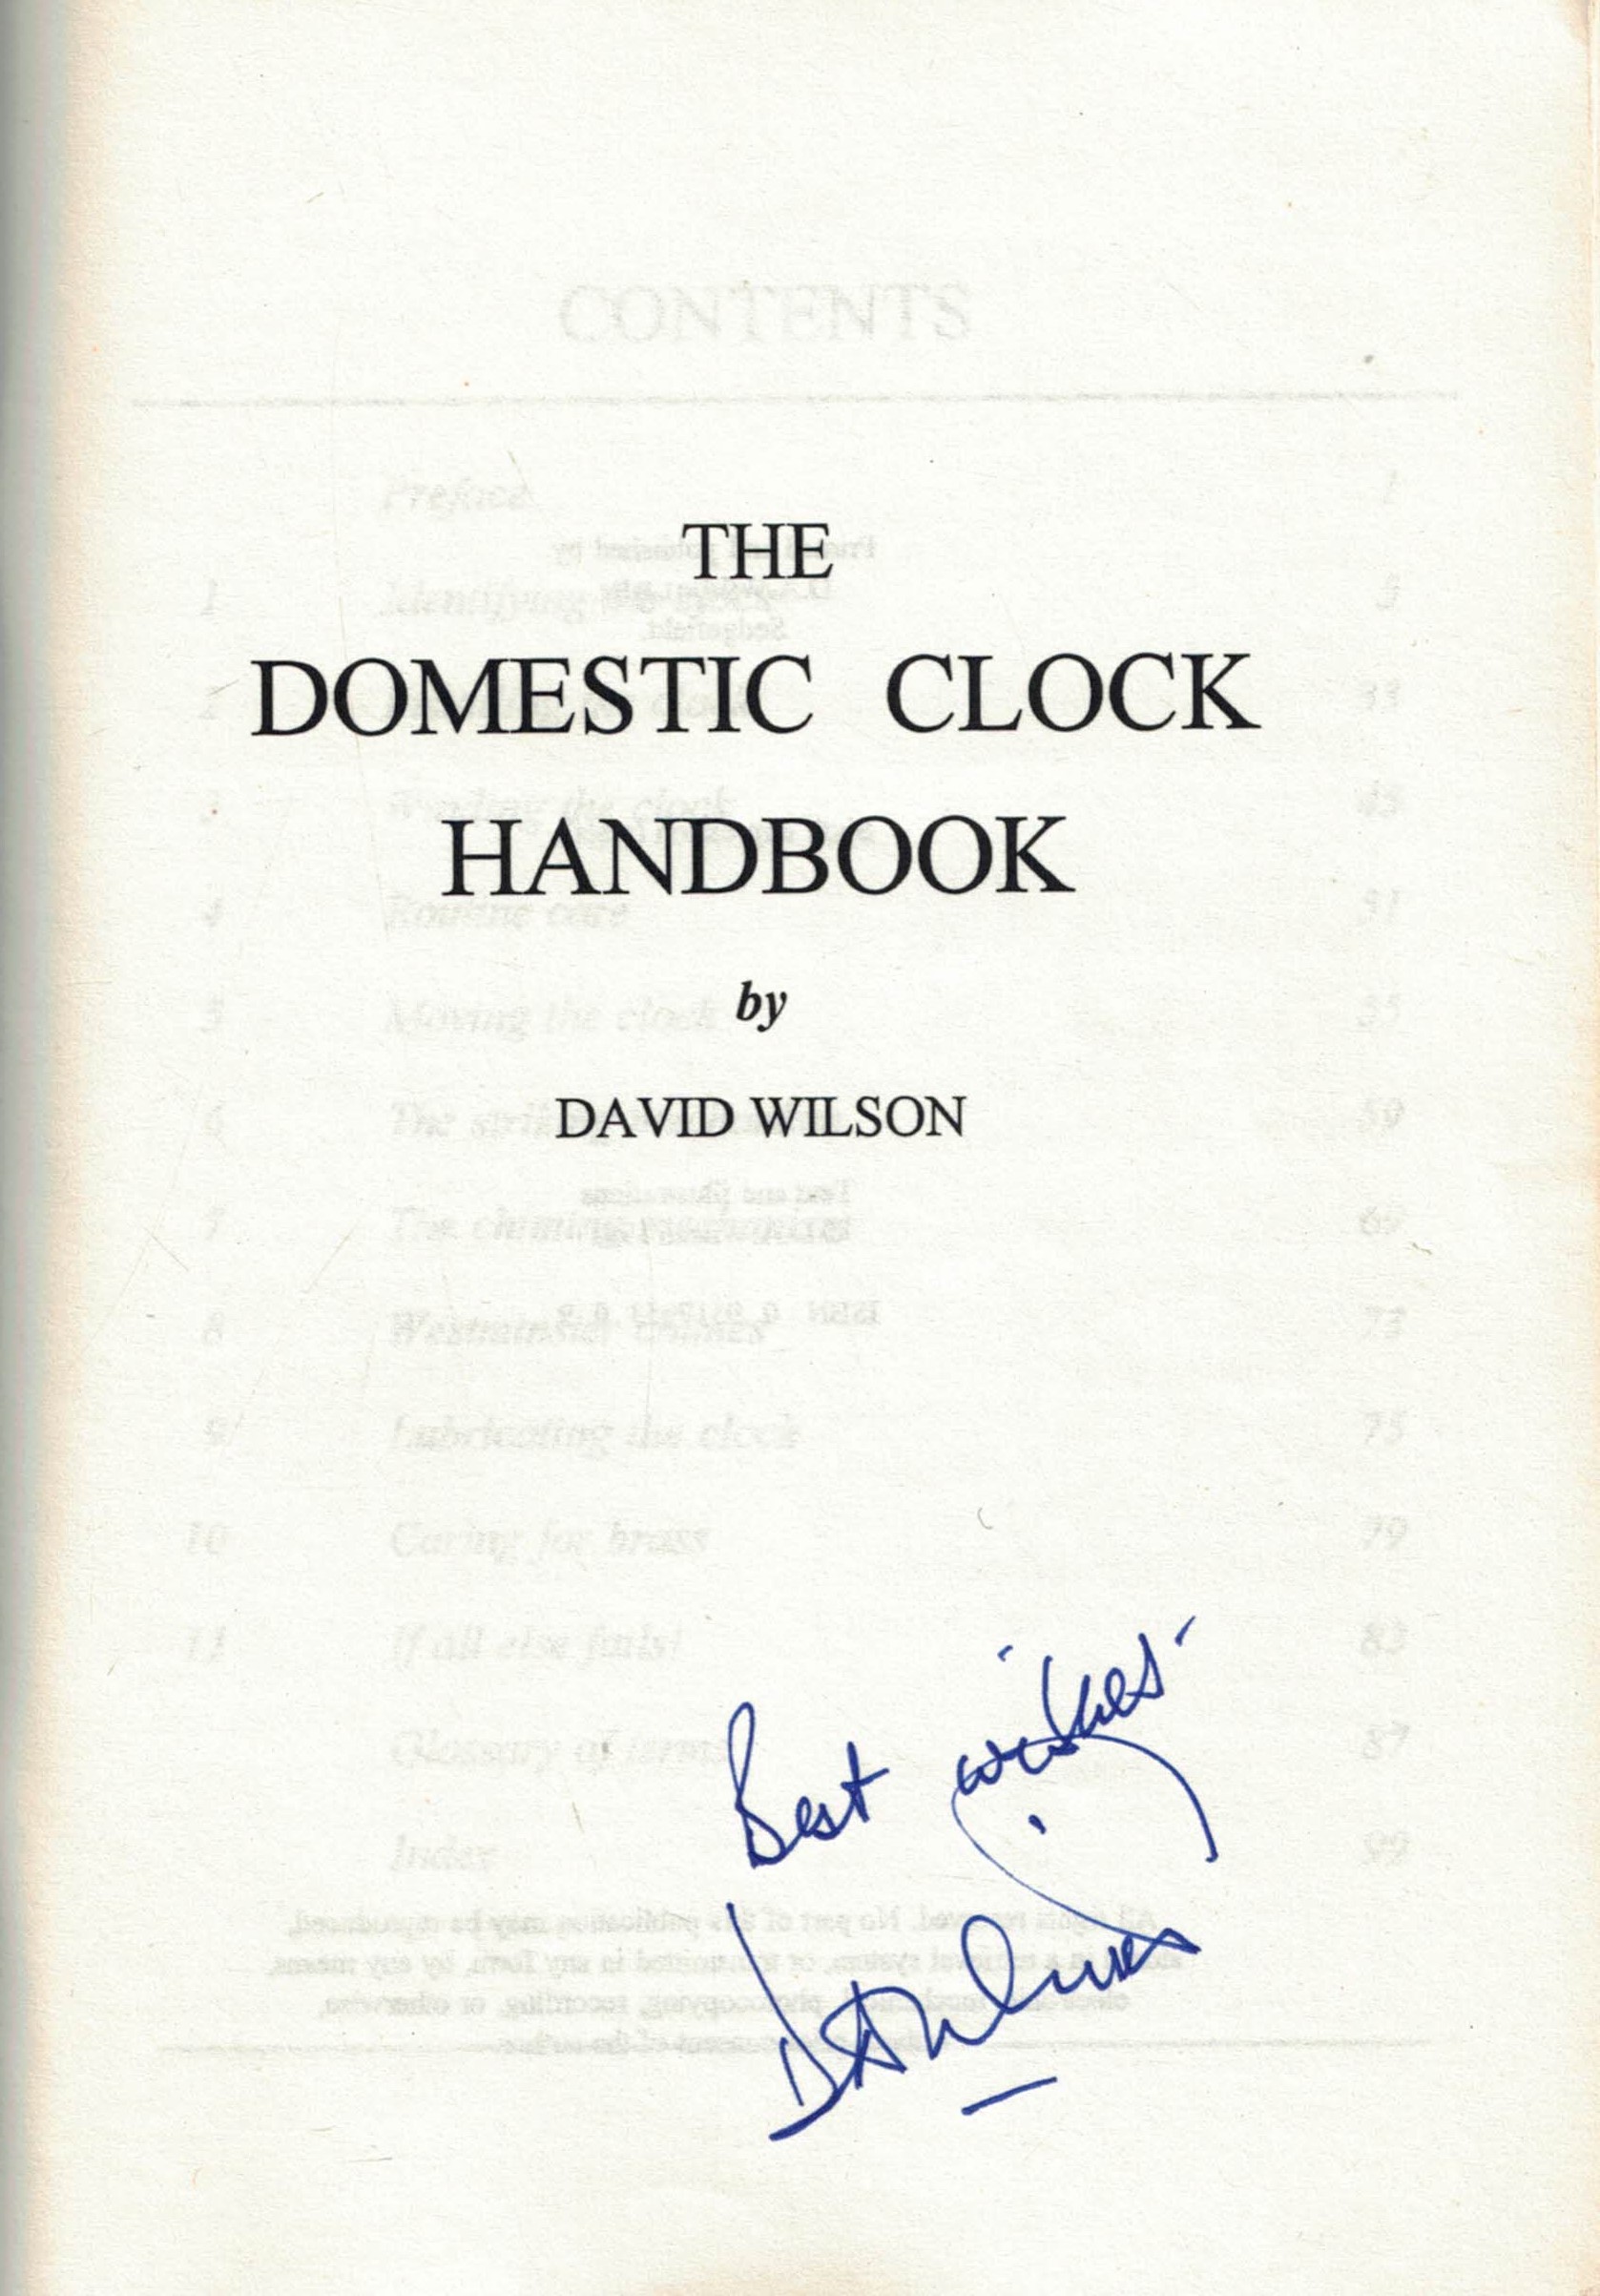 The Domestic Clock Handbook. Signed copy.